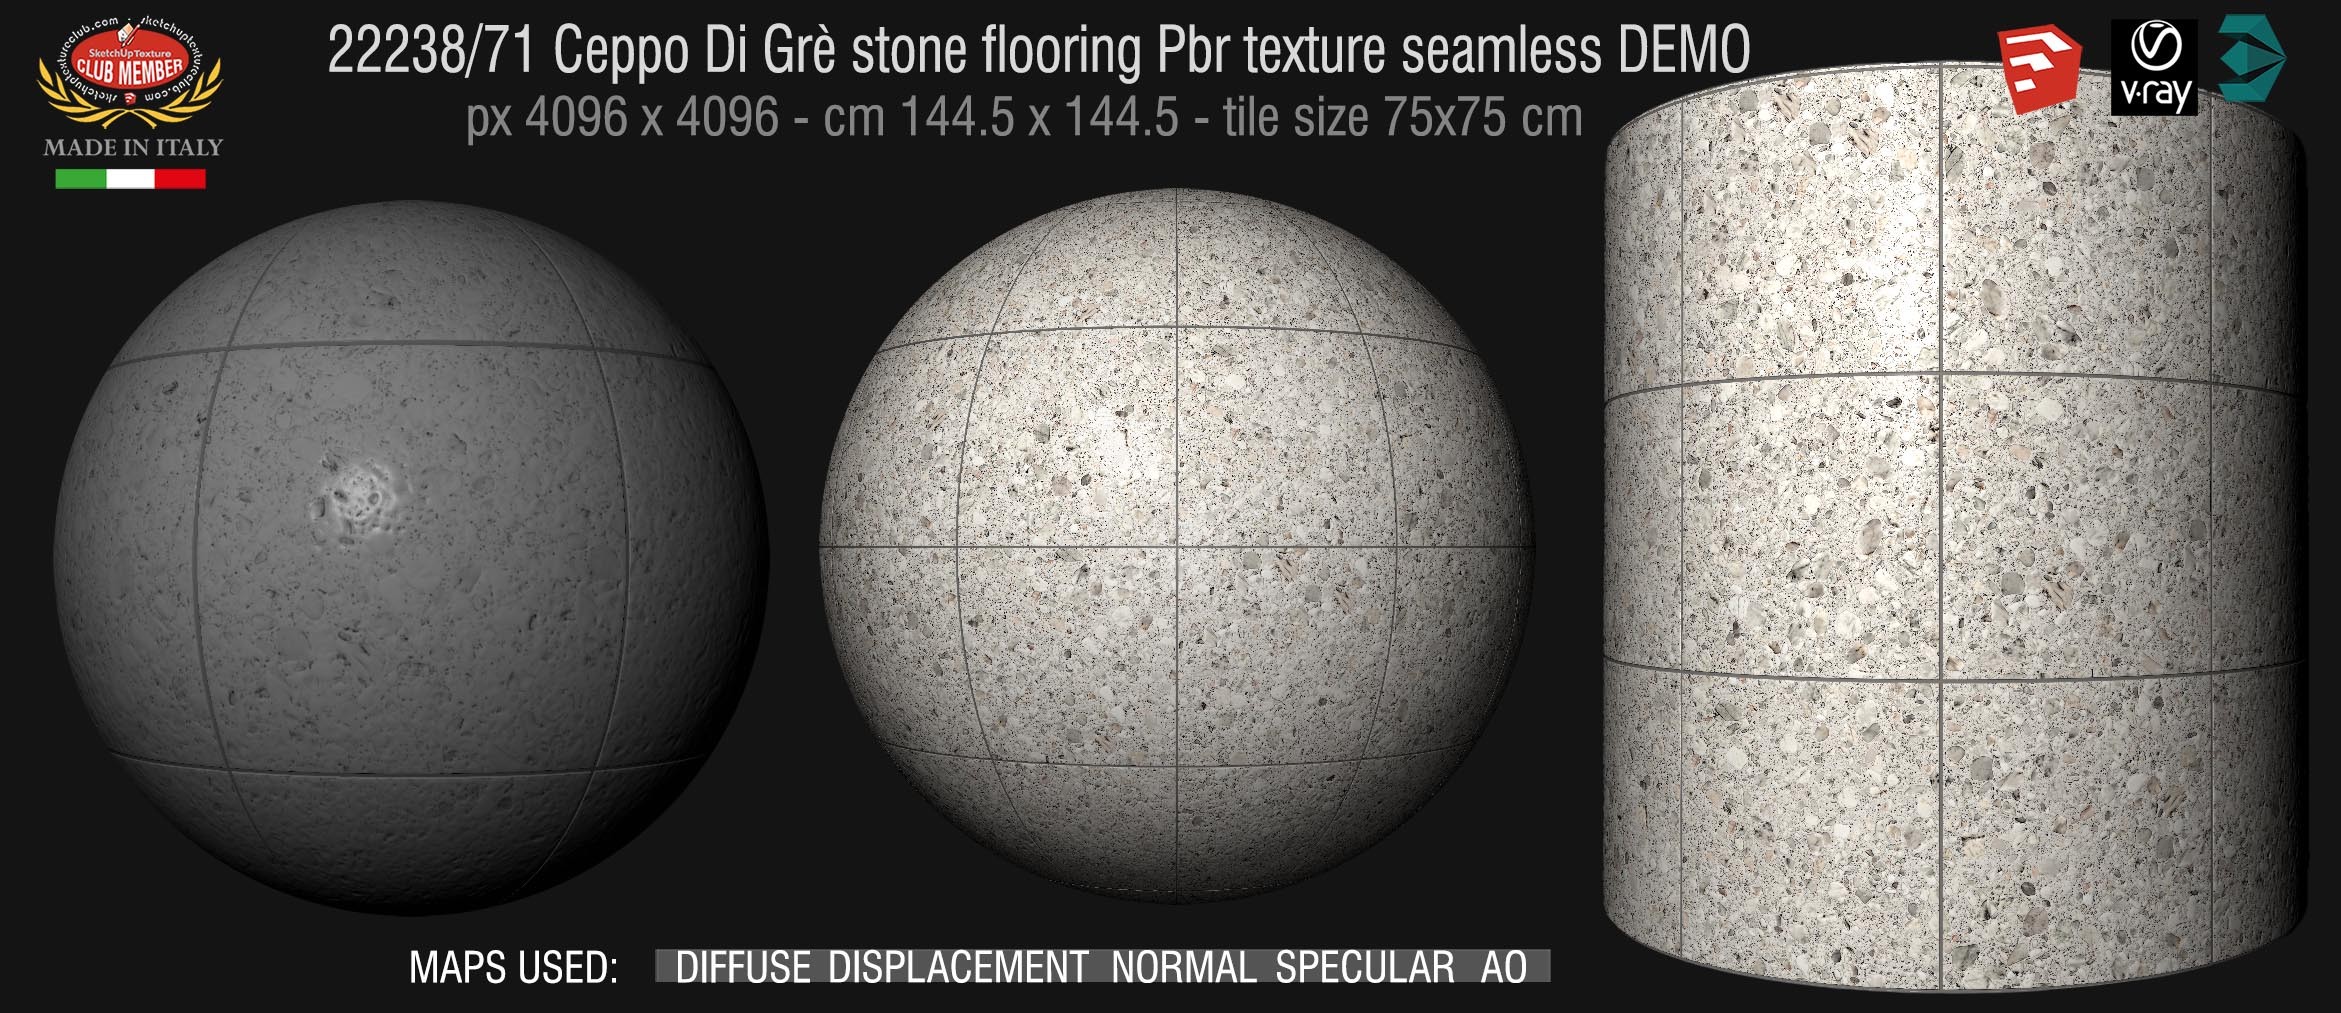 22238_71 Ceppo Di Grè stone flooring Pbr texture seamless DEMO - INTERIOR / OUTDOOR Paving - tile size 75x75 cm